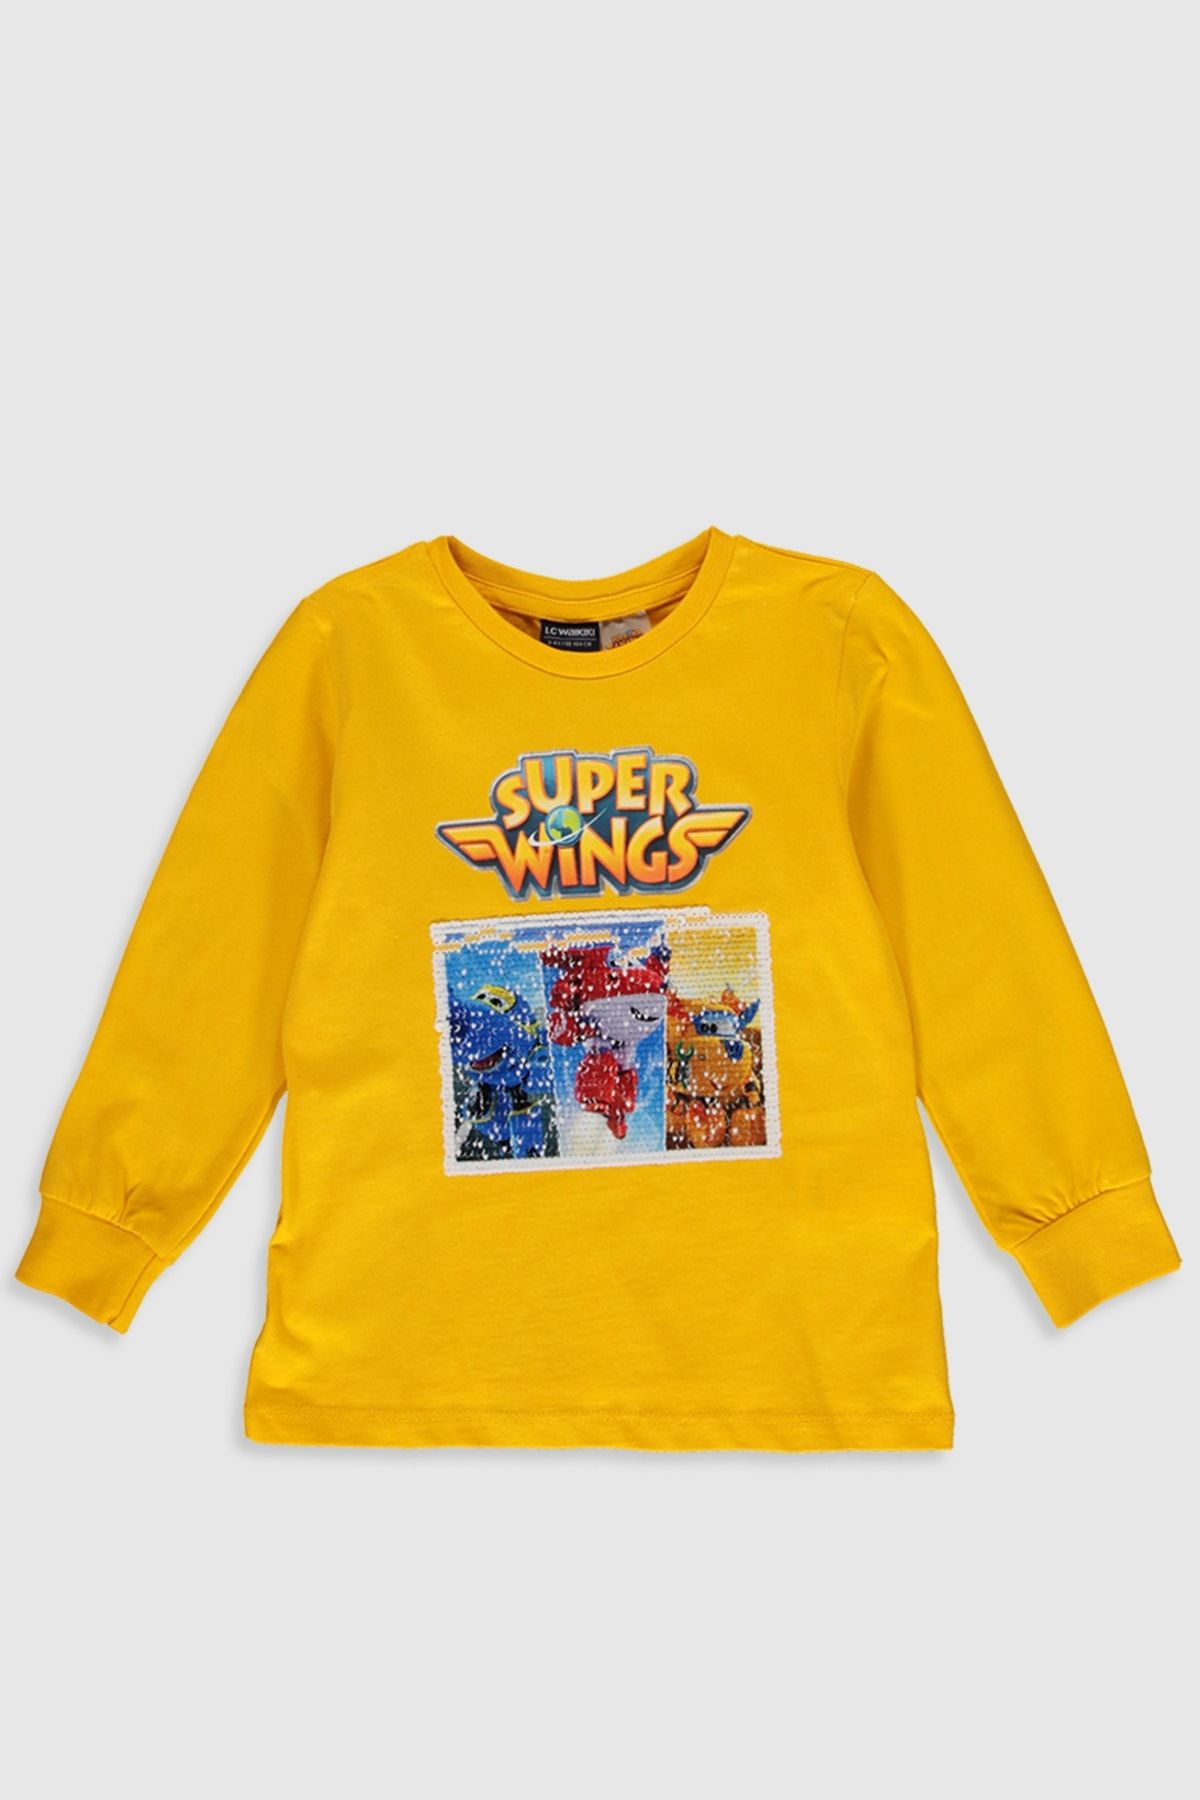 LC Waikiki Super Wings (Harika Kanatlar) Erkek Çocuk Orta Sarı Fx3 T-Shirt